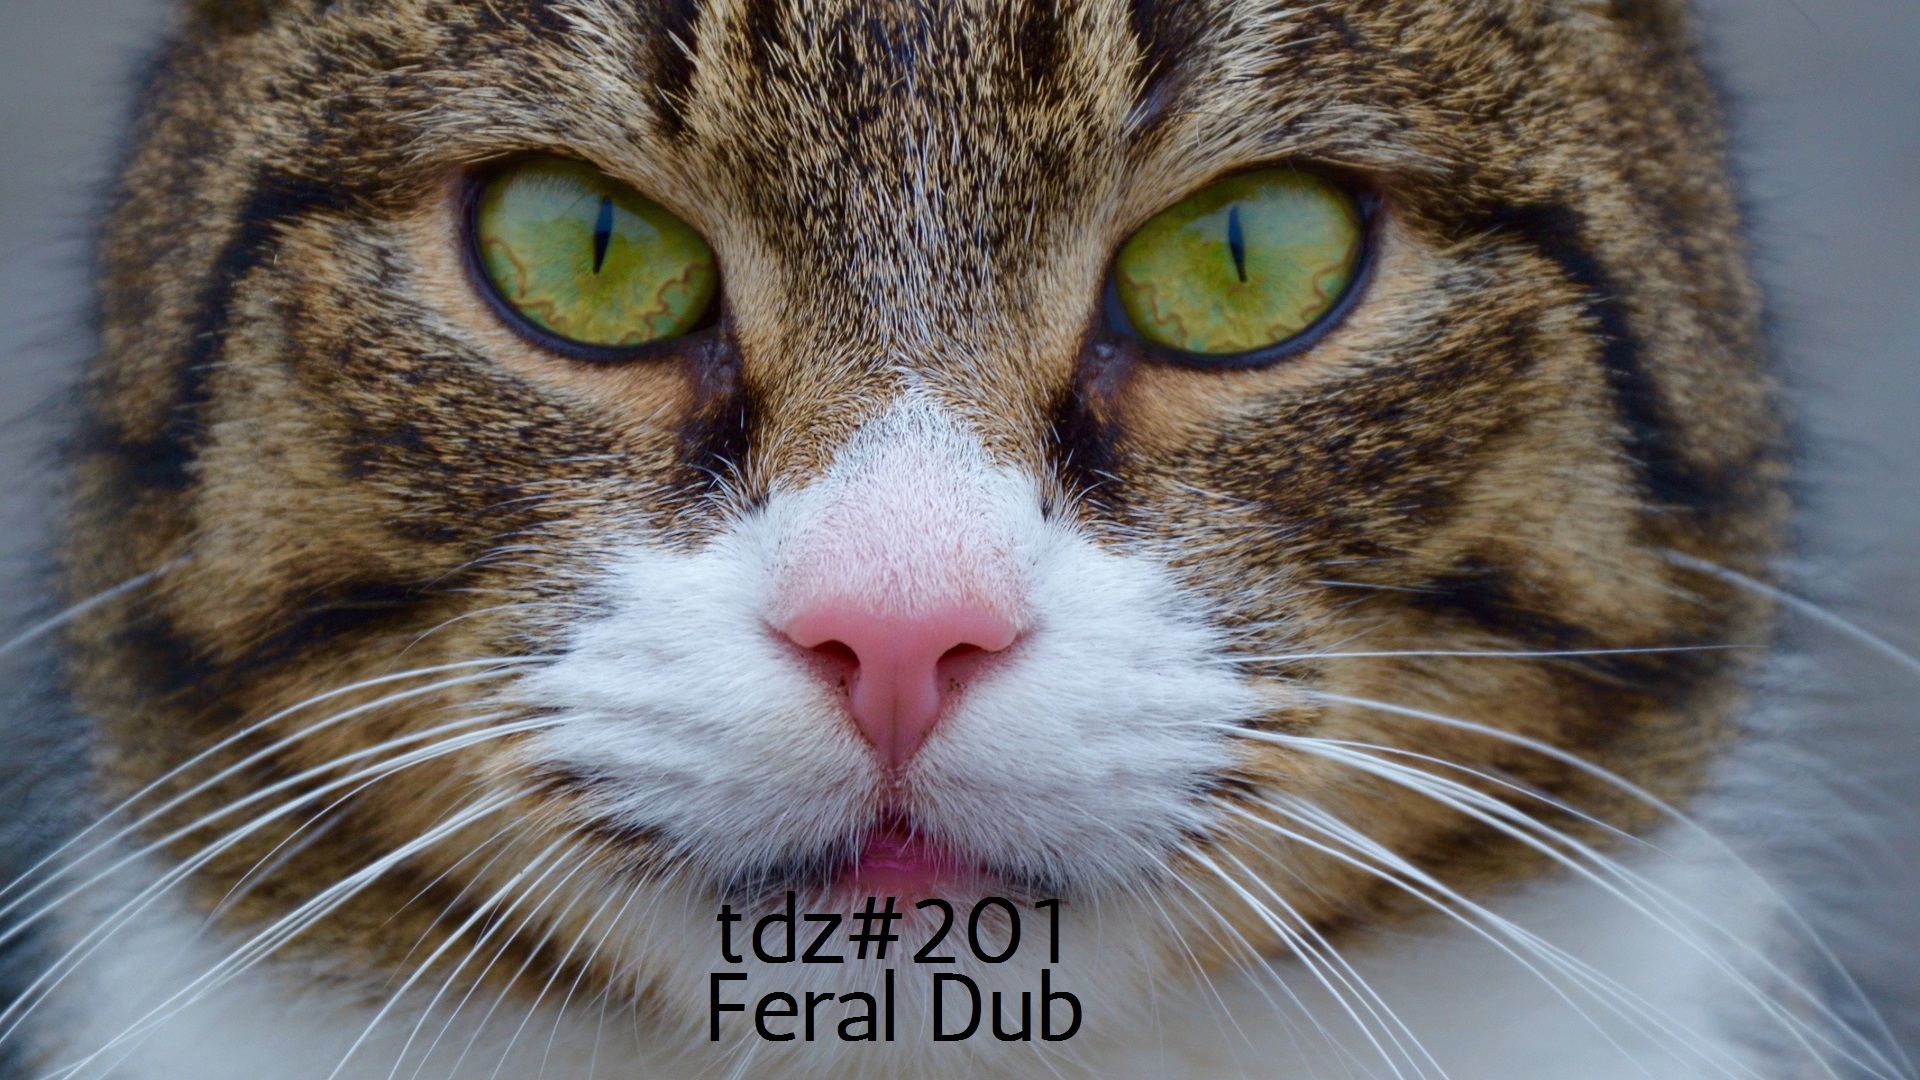 TDZ#201... Feral Dub.....